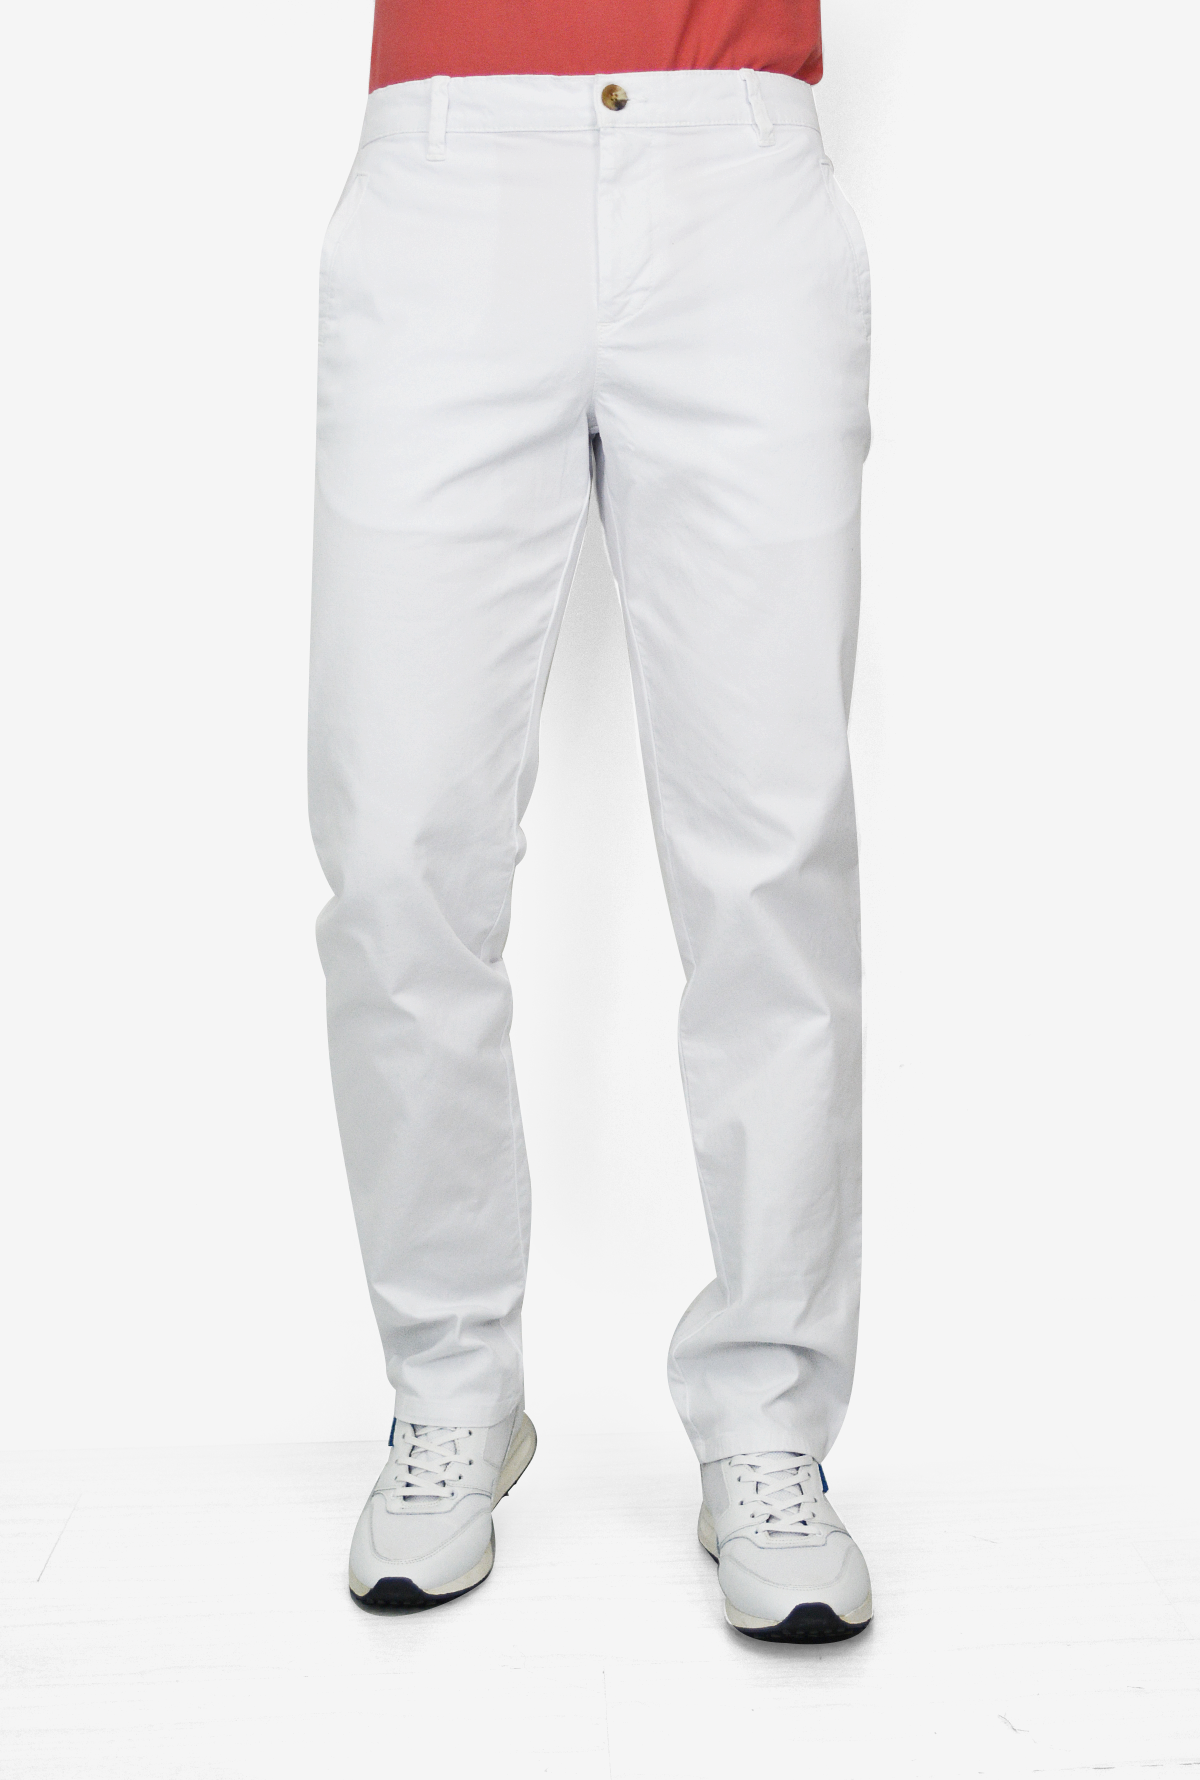 pantalon blanco hombre//